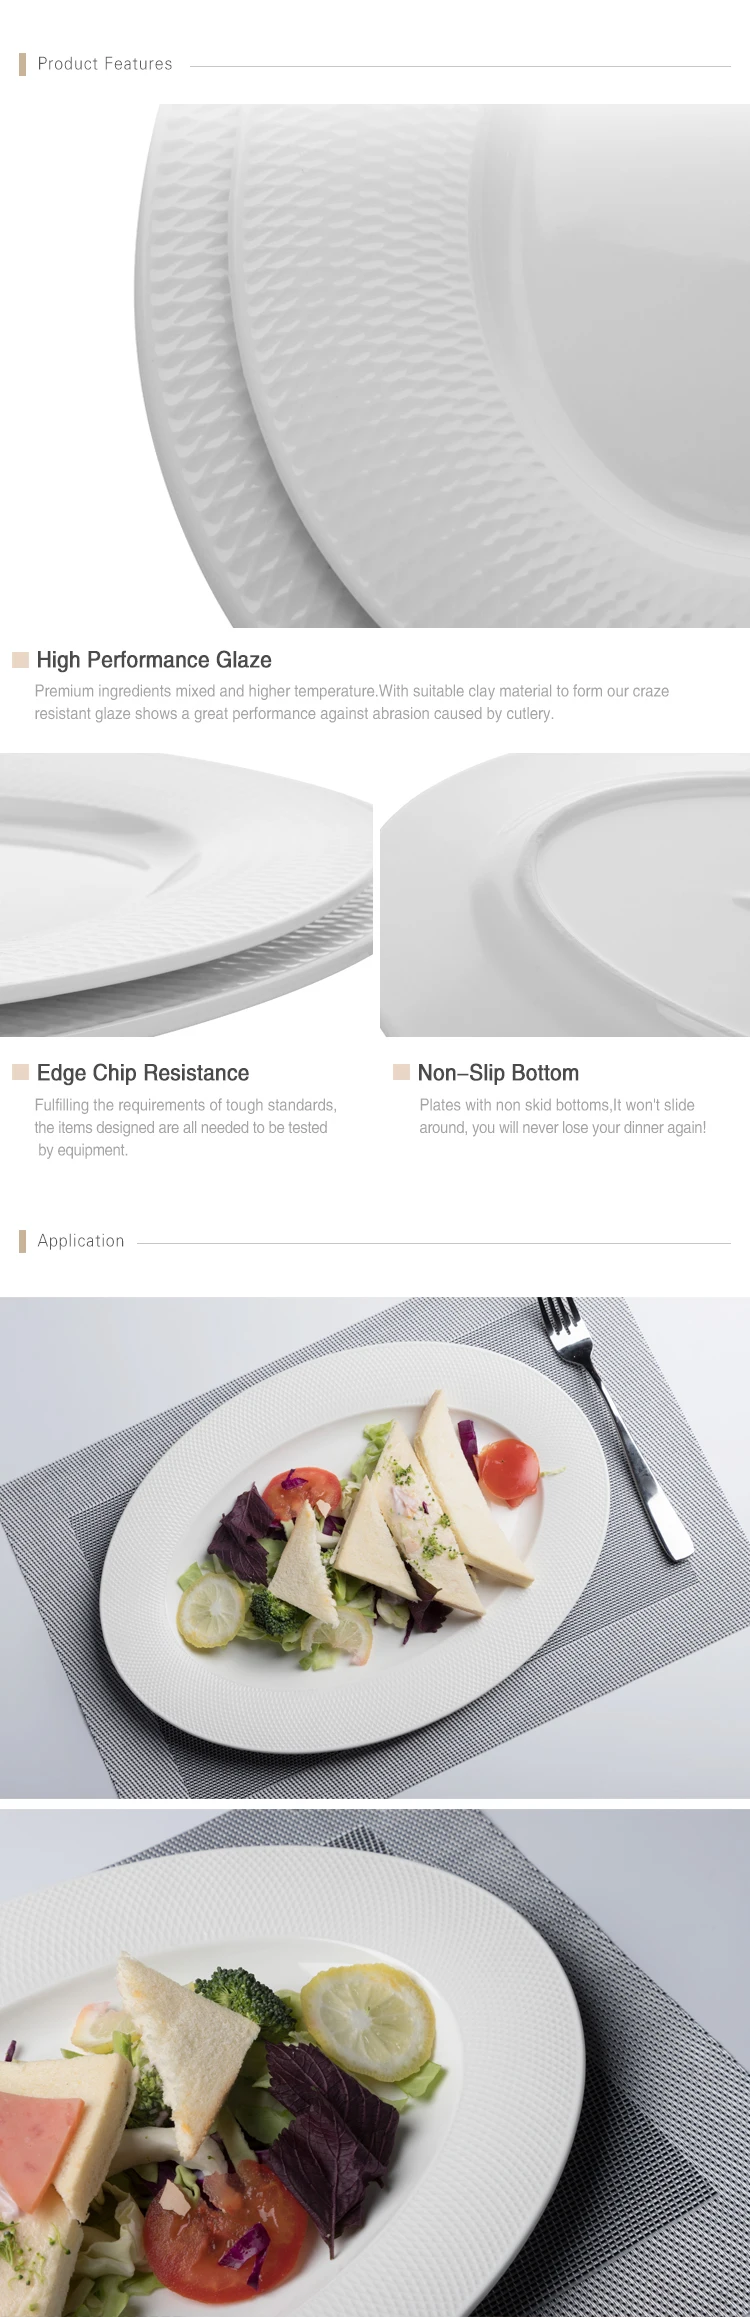 Wholesale Banquet Hotel Porcelain Oval Shape Dish, Hot Selling Catering Vajilla Hotel Restaurant Porcelain Oval Plate/